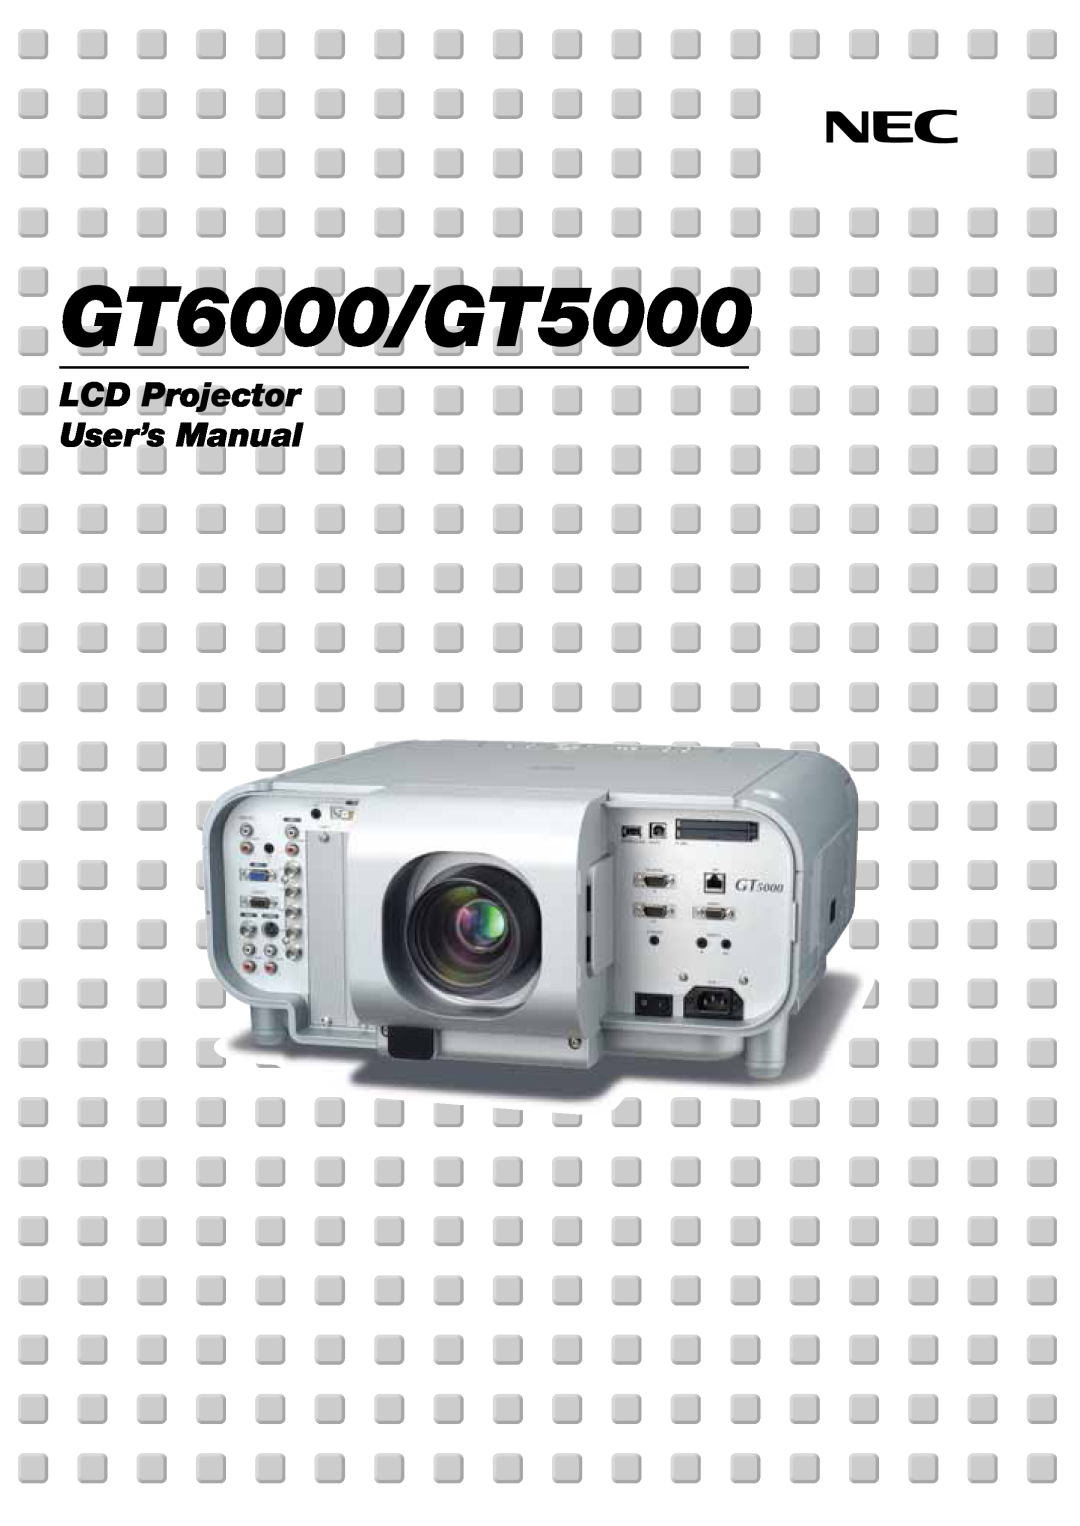 NEC user manual GT6000/GT5000, LCD Projector User’s Manual 